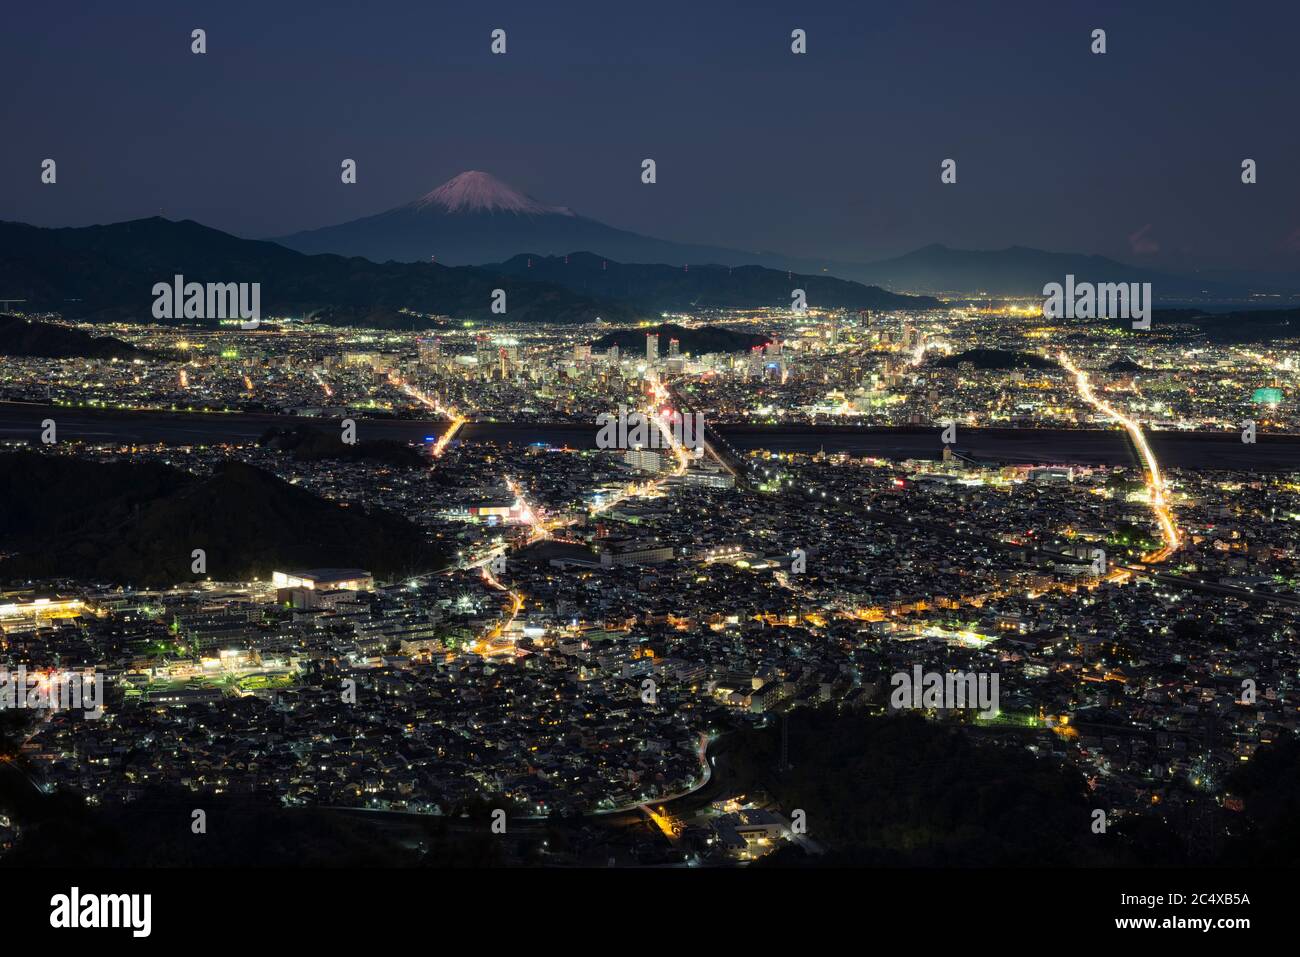 Mt. Fuji over a City Stock Photo